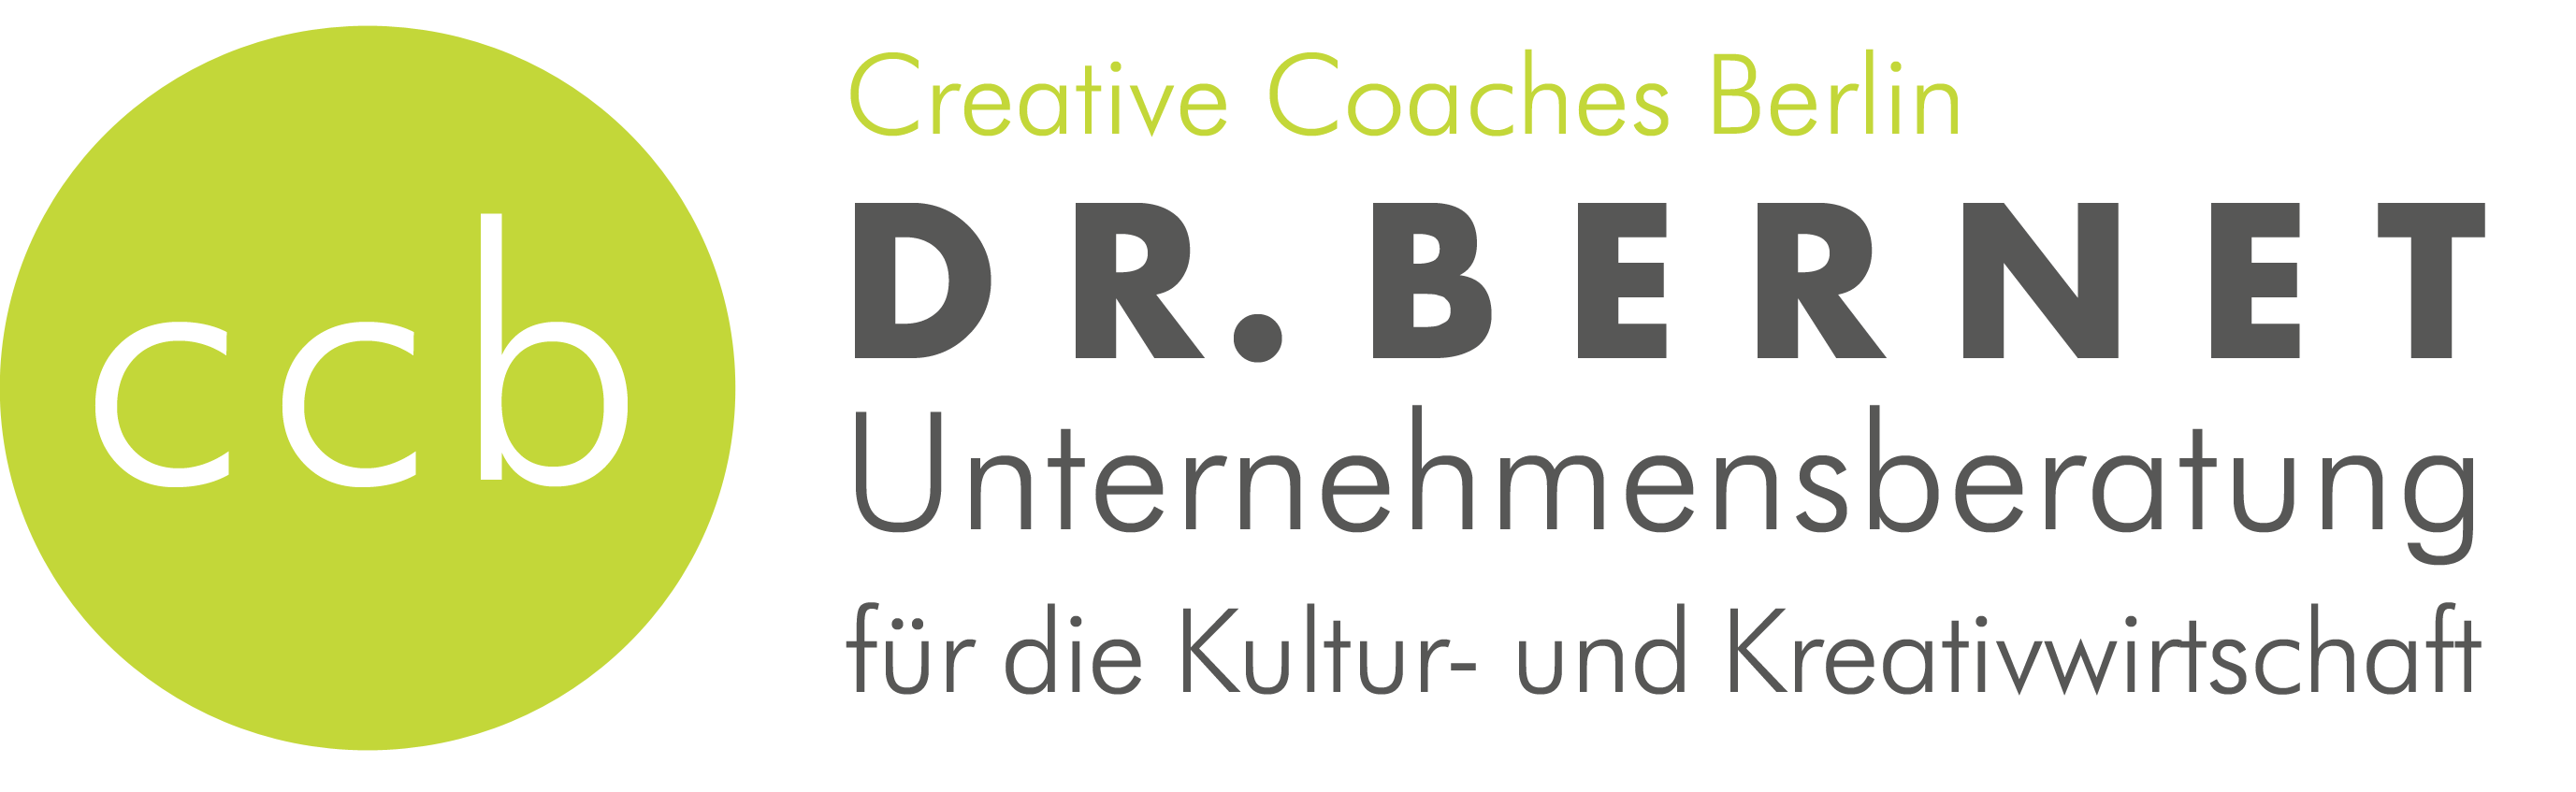 Dr. Bernet Unternehmensberatung Logo